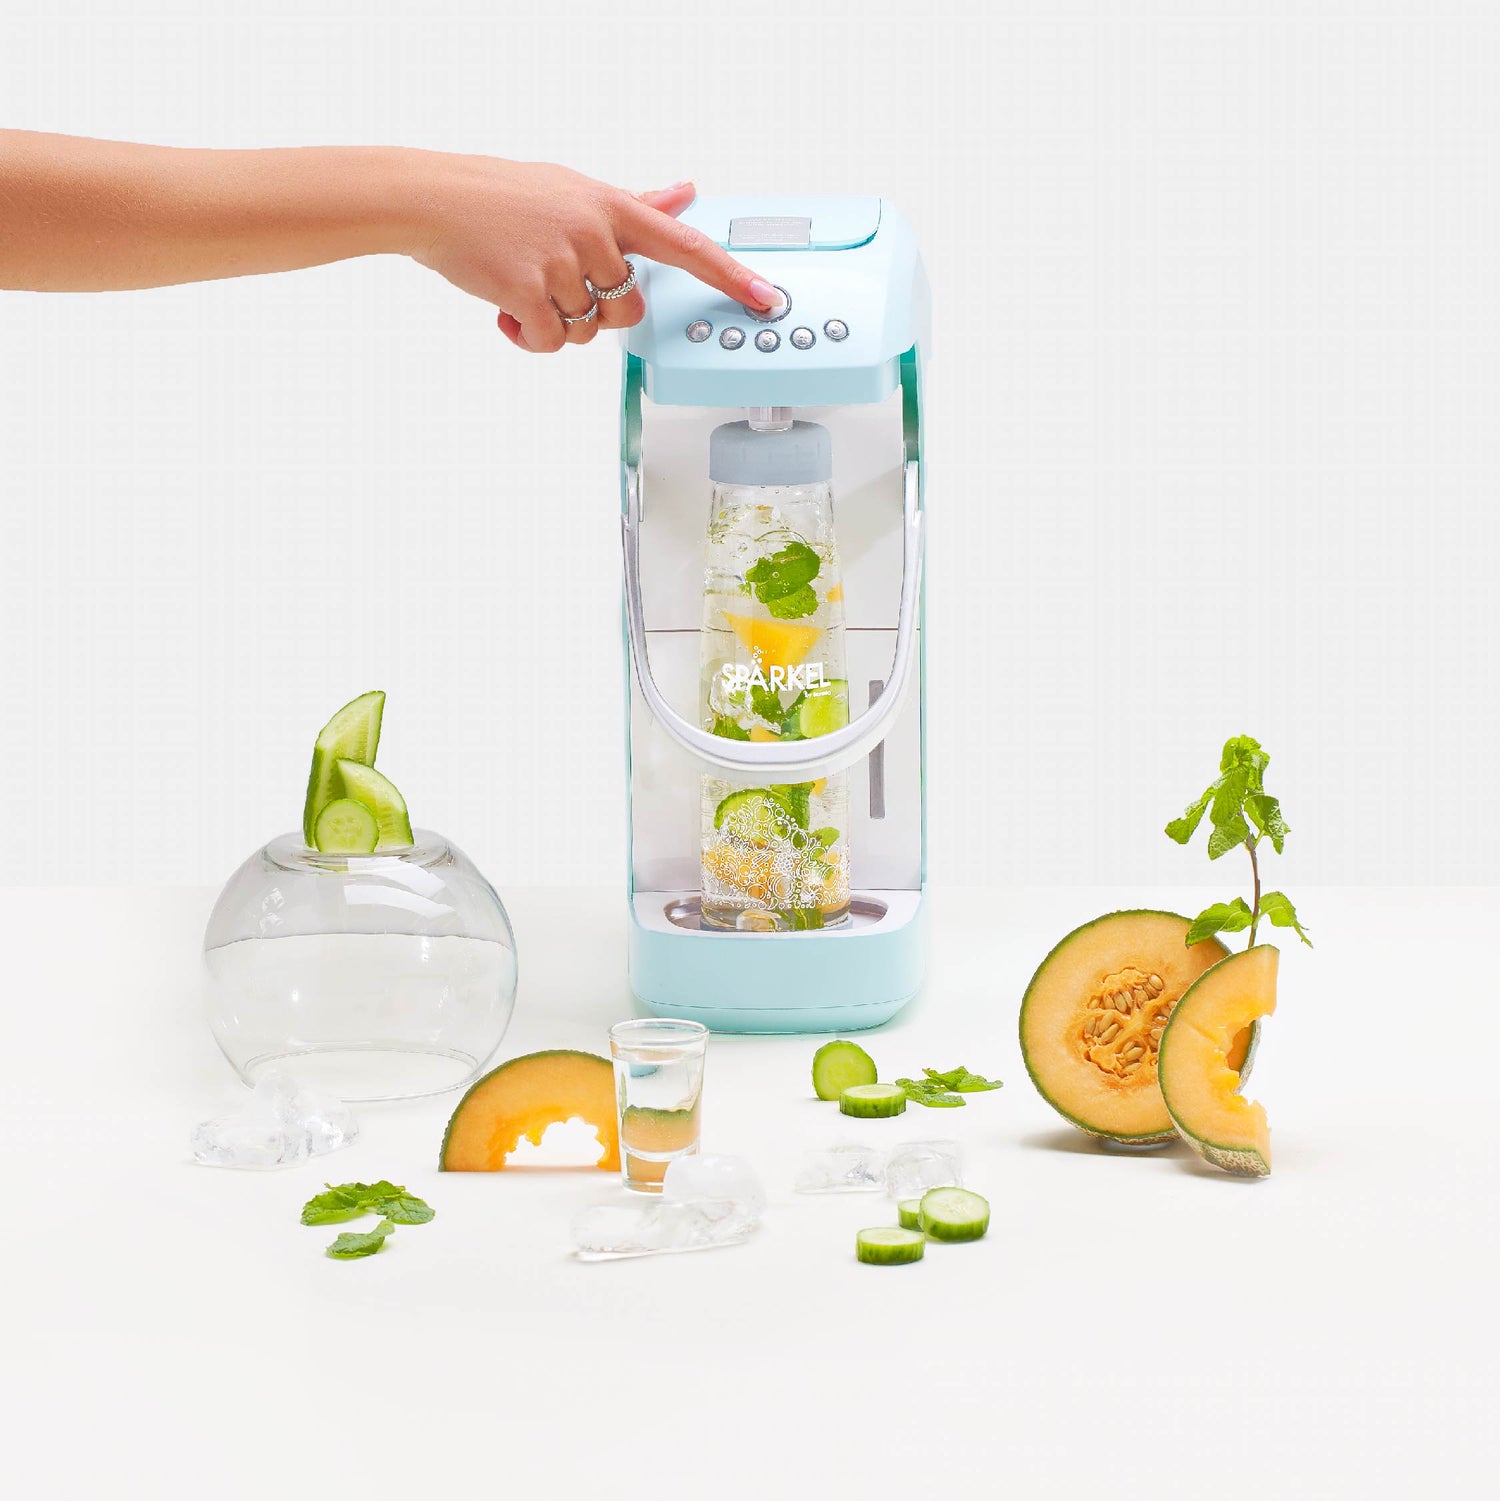 Seafoam Spärkel Soda Maker infusing melon mint into a healthy sparkling soda water infusion